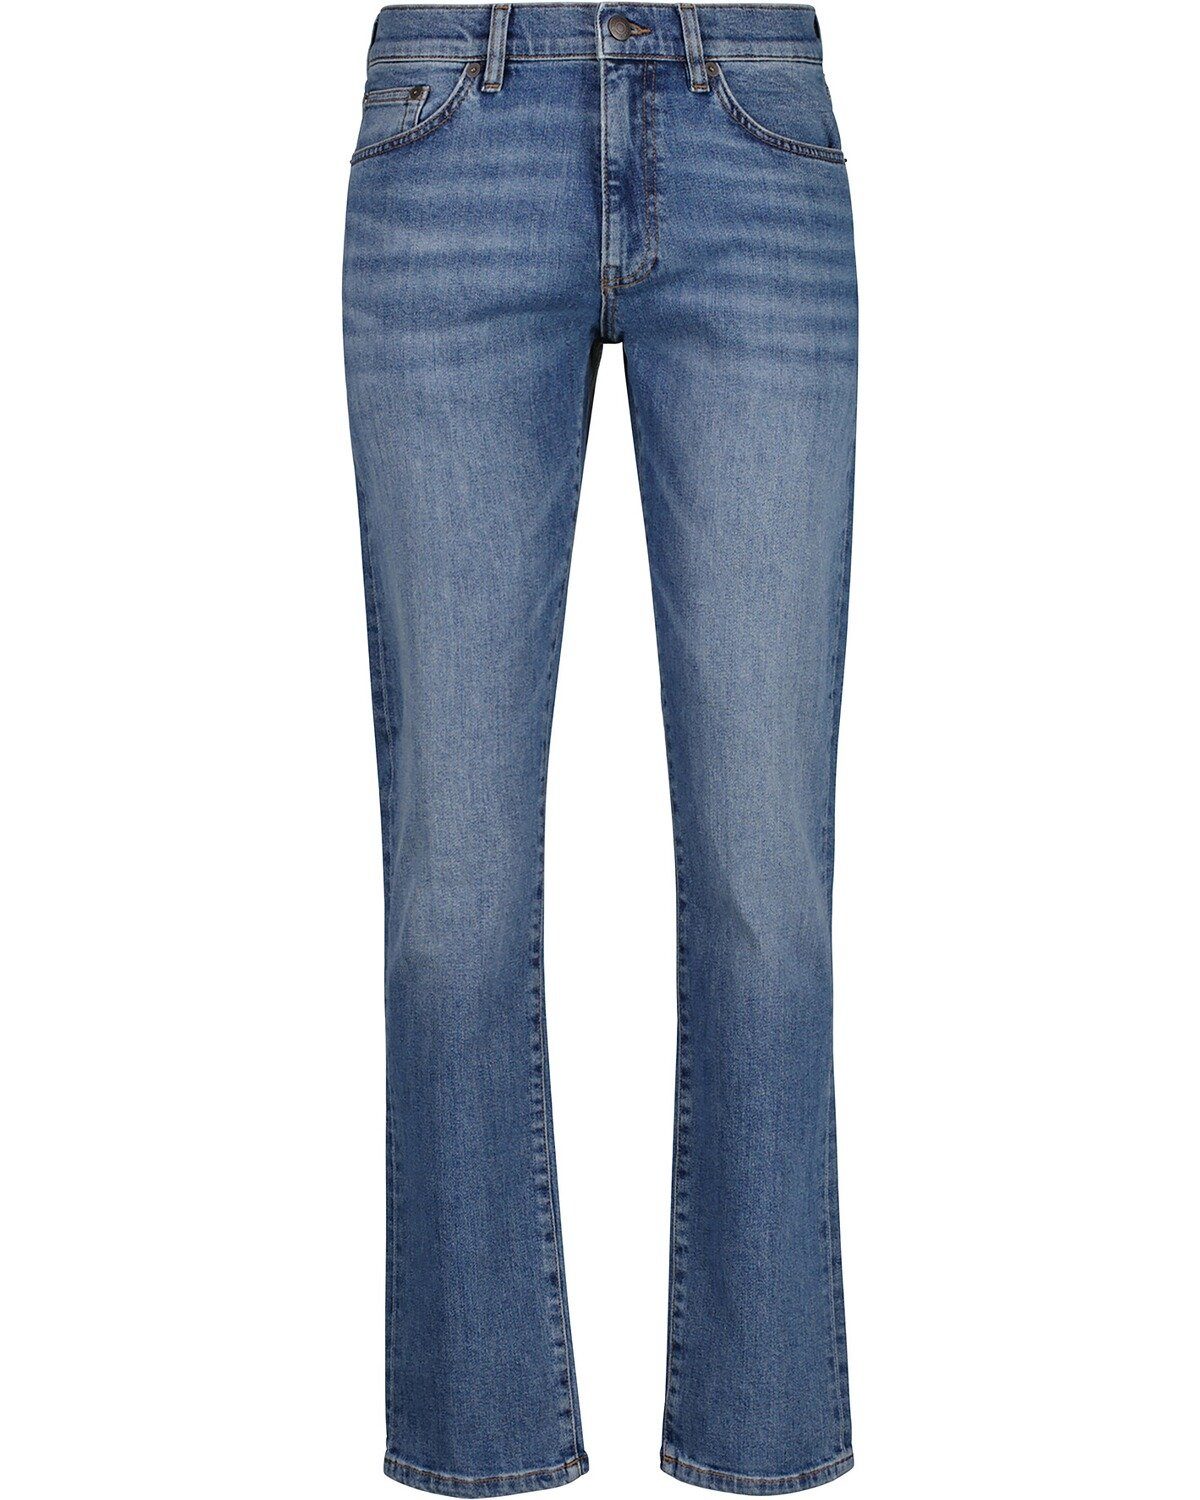 Gant 5-Pocket-Jeans Jeans Slim Fit Mid Blue Worn In